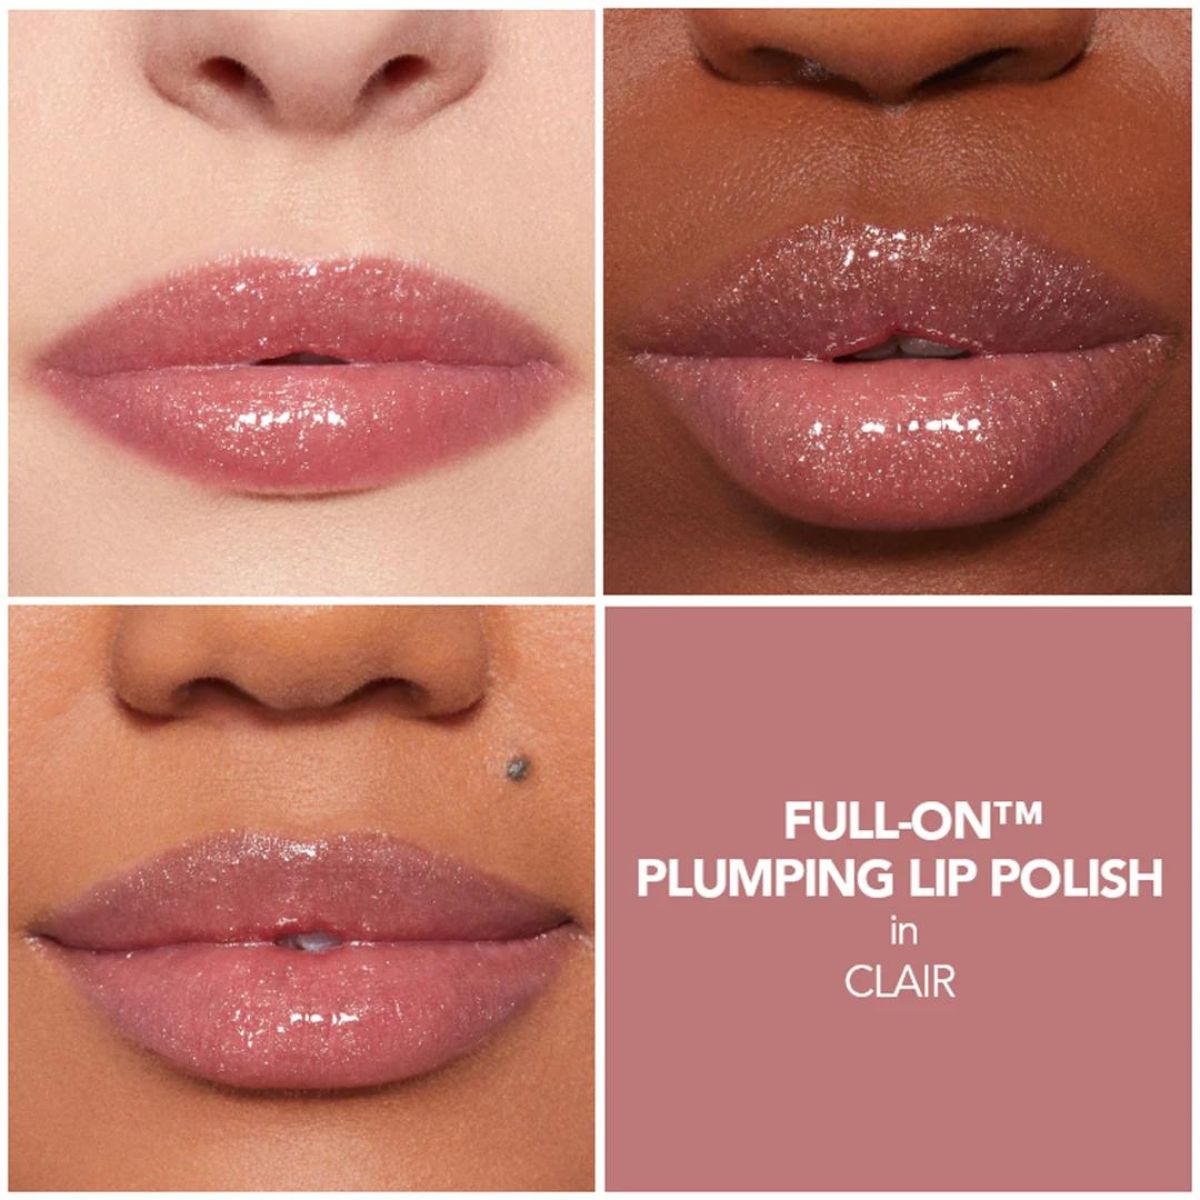 Buxom Full-On Plumping Lip Polish in Clair